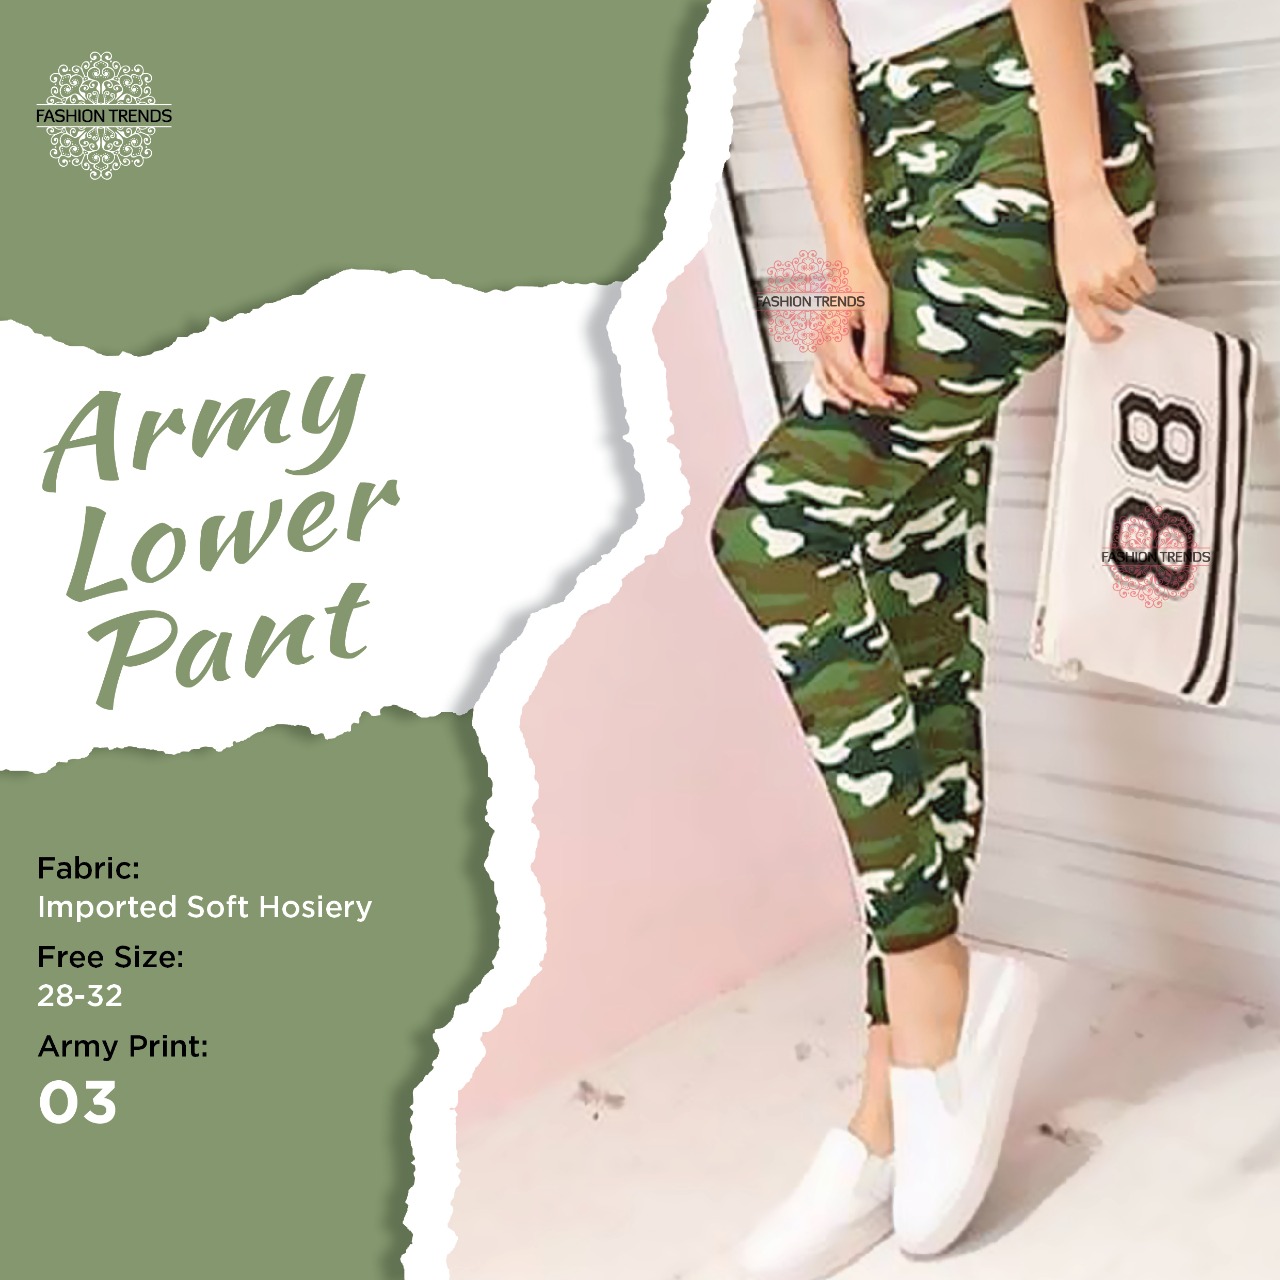 K4u Present Army Lower Pant Soft Hosiery Wholesale Price